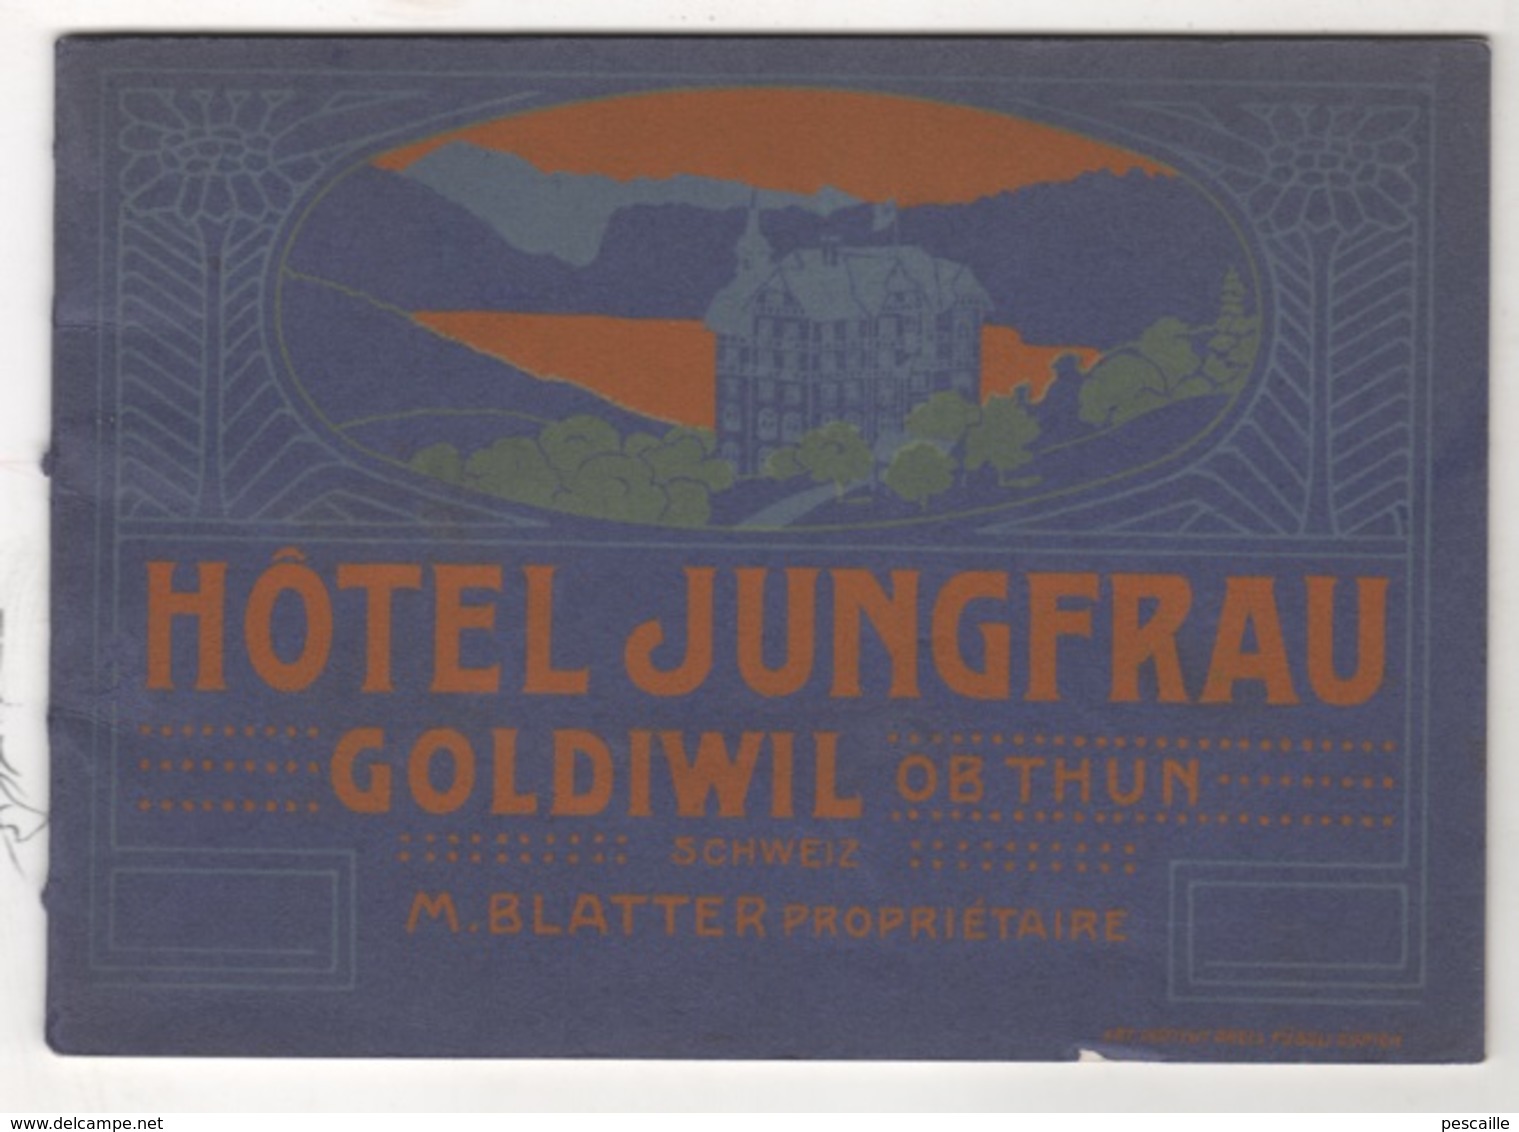 BEAU LIVRET HOTEL JUNGFRAU - GOLDIWIL OB THUN - SCHWEIZ - M. BLATTER PROPRIETAIRE - 1911 - 23 PAGES AVEC PHOTOS - Advertising